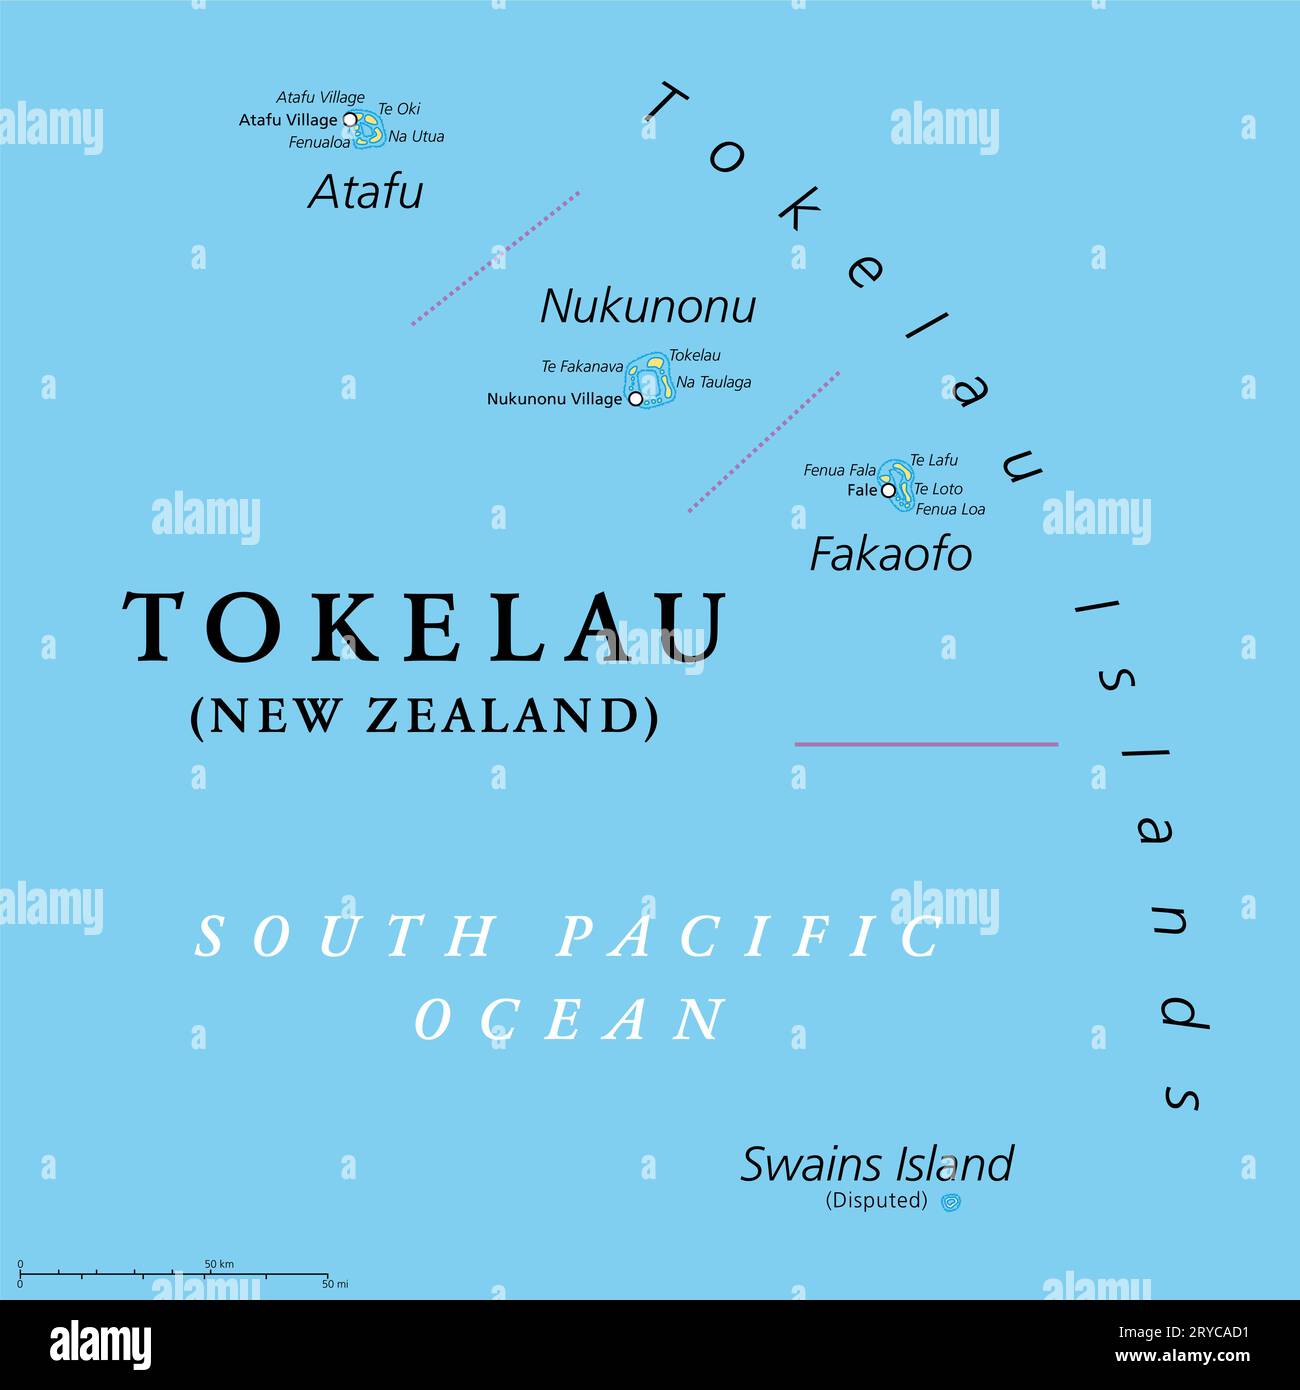 Tokelau, abhängiges Territorium Neuseelands, politische Karte. Archipel im Südpazifik, bestehend aus den Atollen Atafu, Nukunonu und Fakaofo. Stockfoto